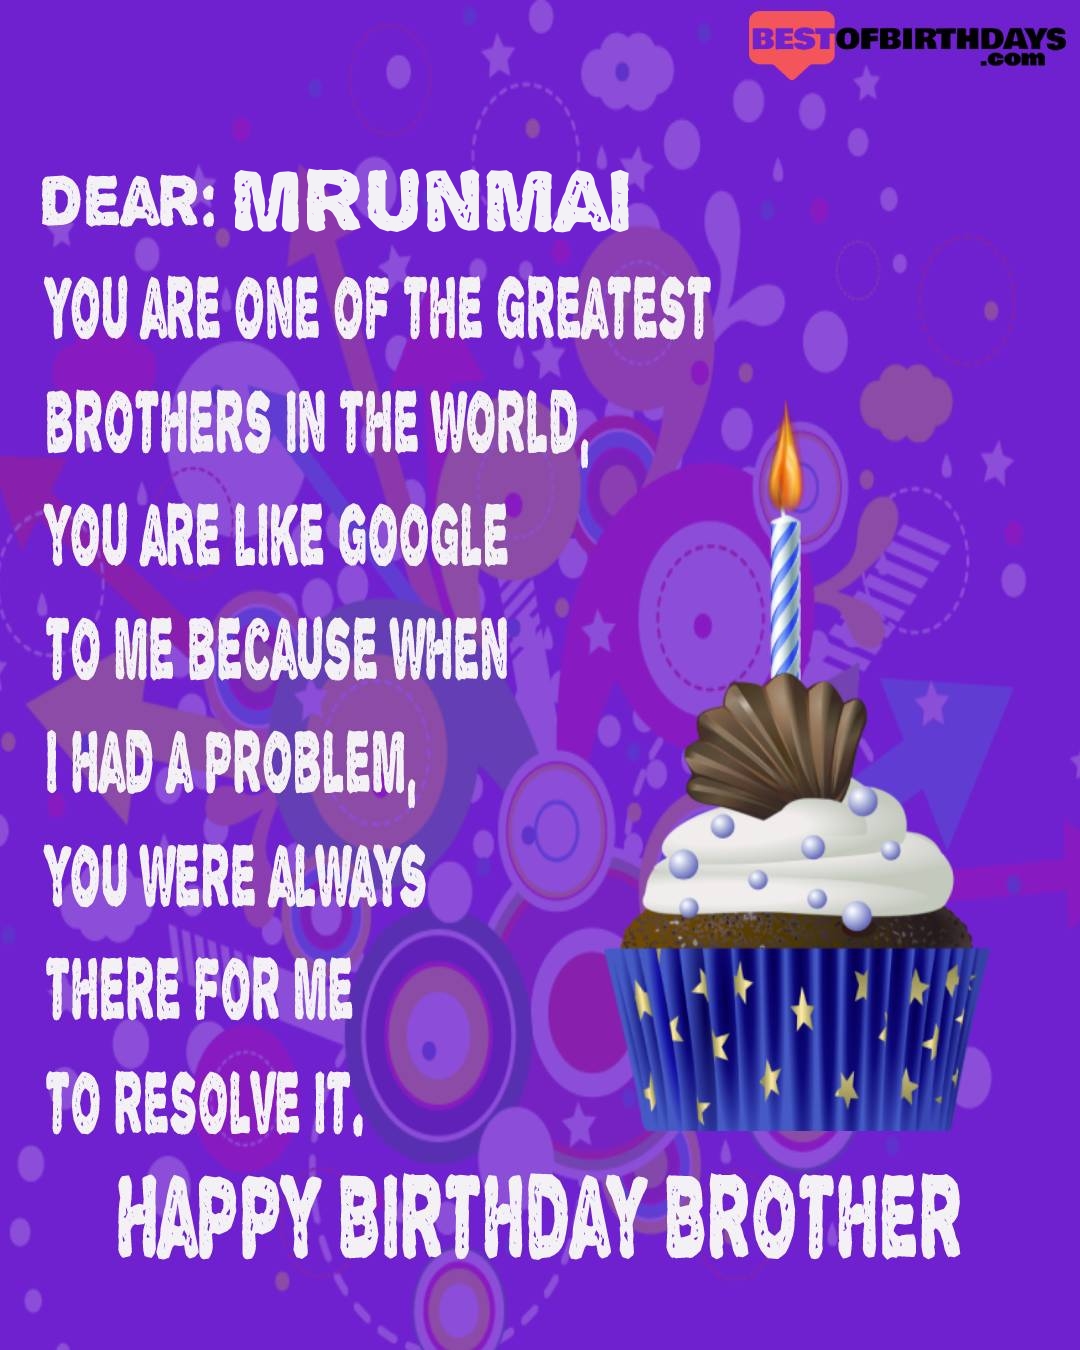 Happy birthday mrunmai bhai brother bro